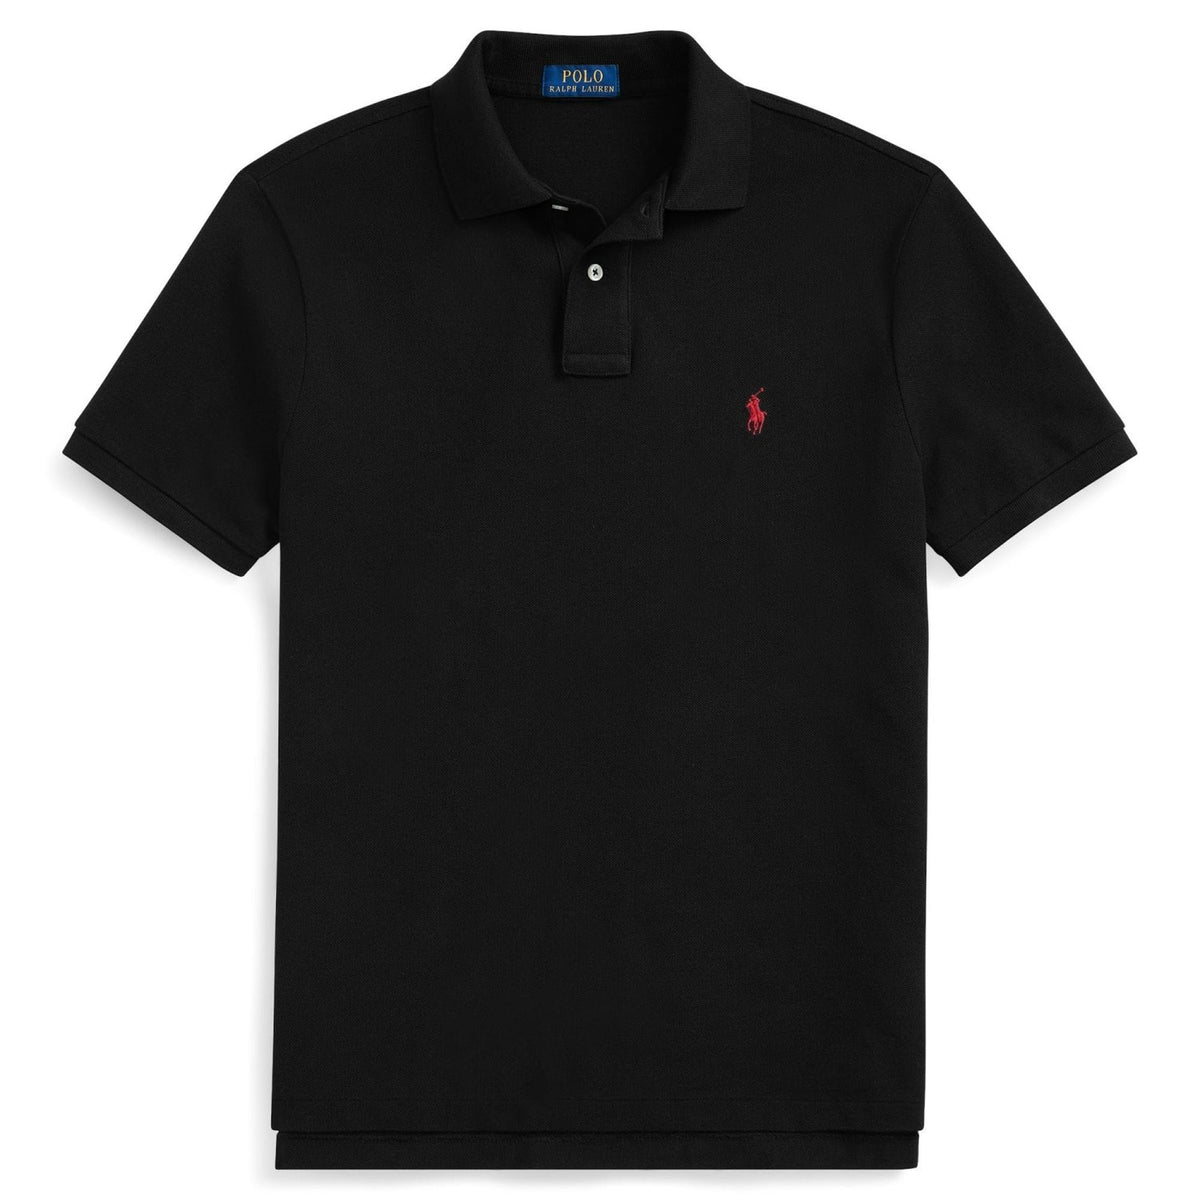 Polo Ralph Lauren Polo Shirts Polo Ralph Lauren Black Polo Shirt